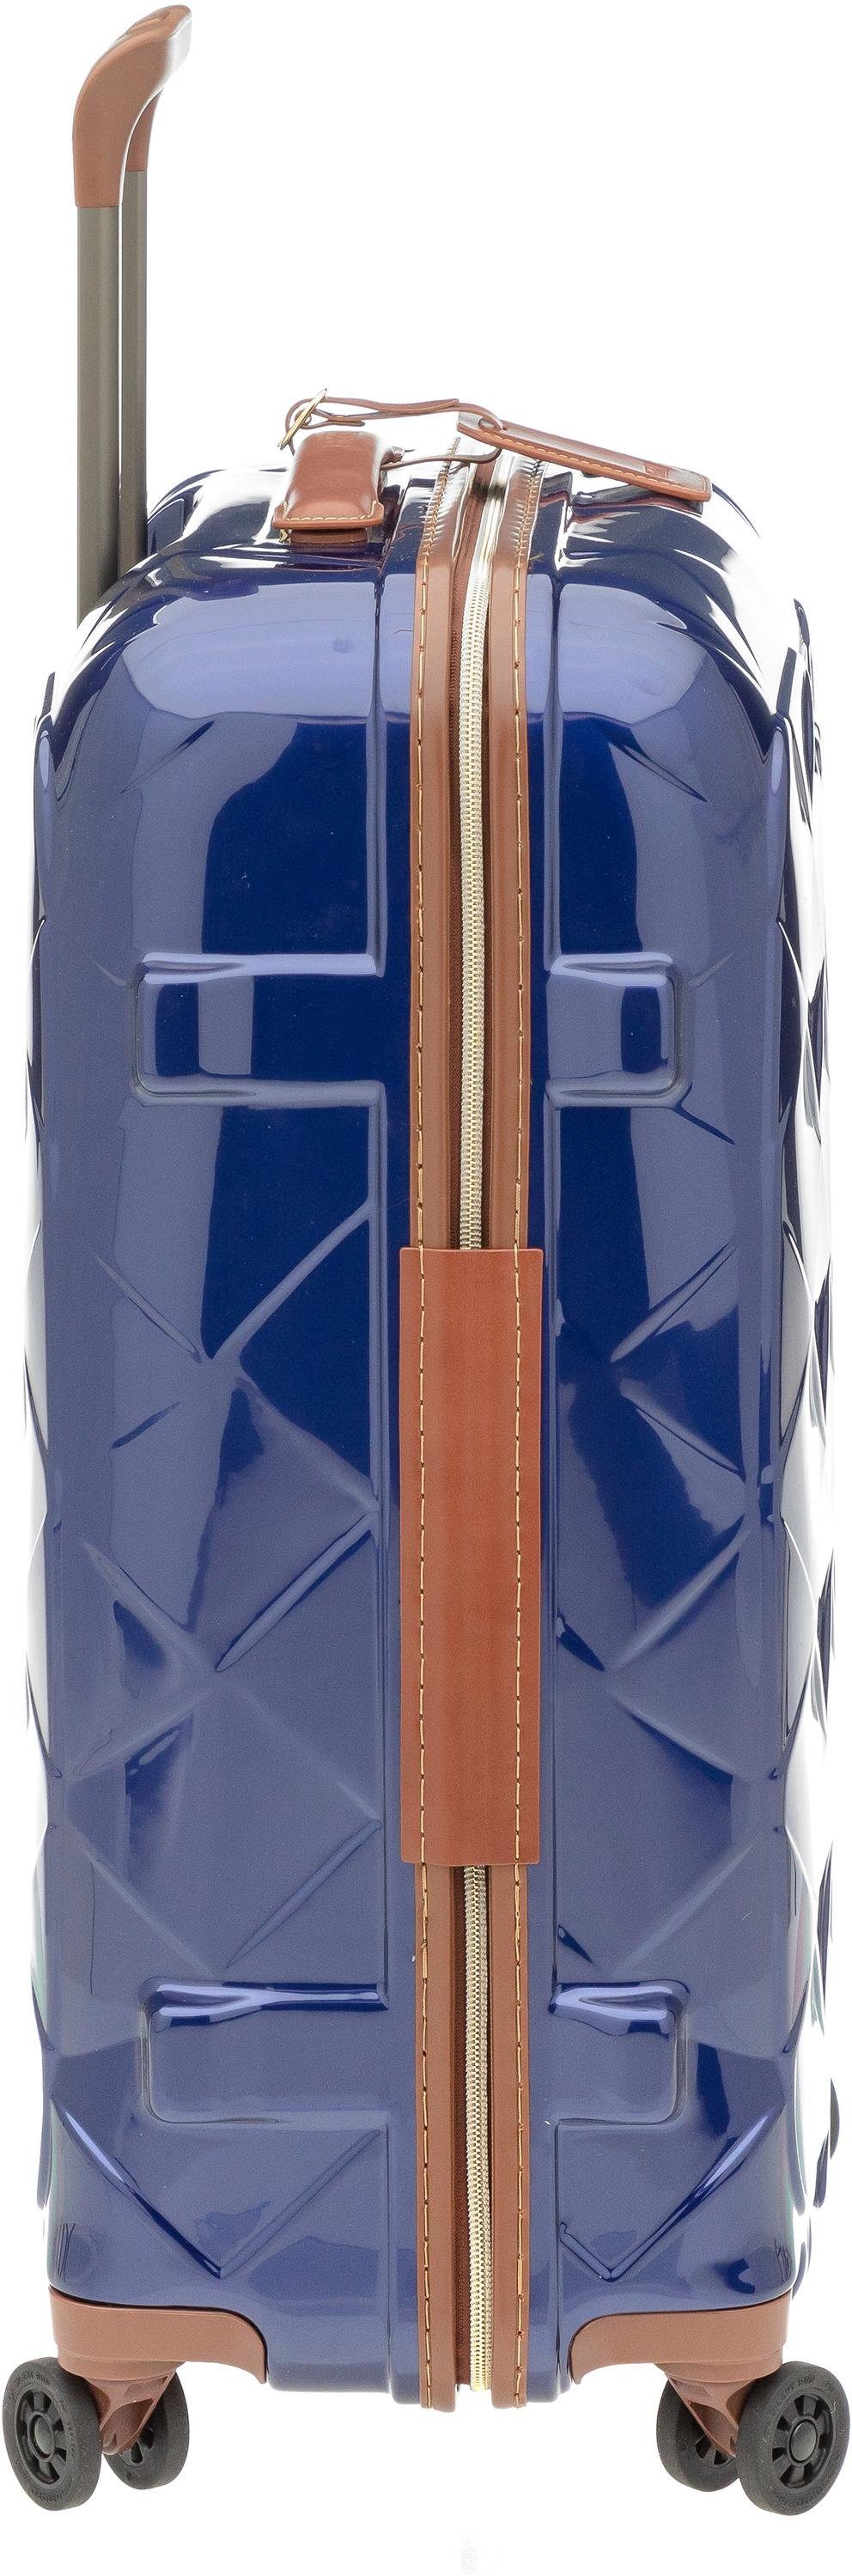 Stratic Hartschalen-Trolley Rollen blue & cm, More, 66 4 Leather